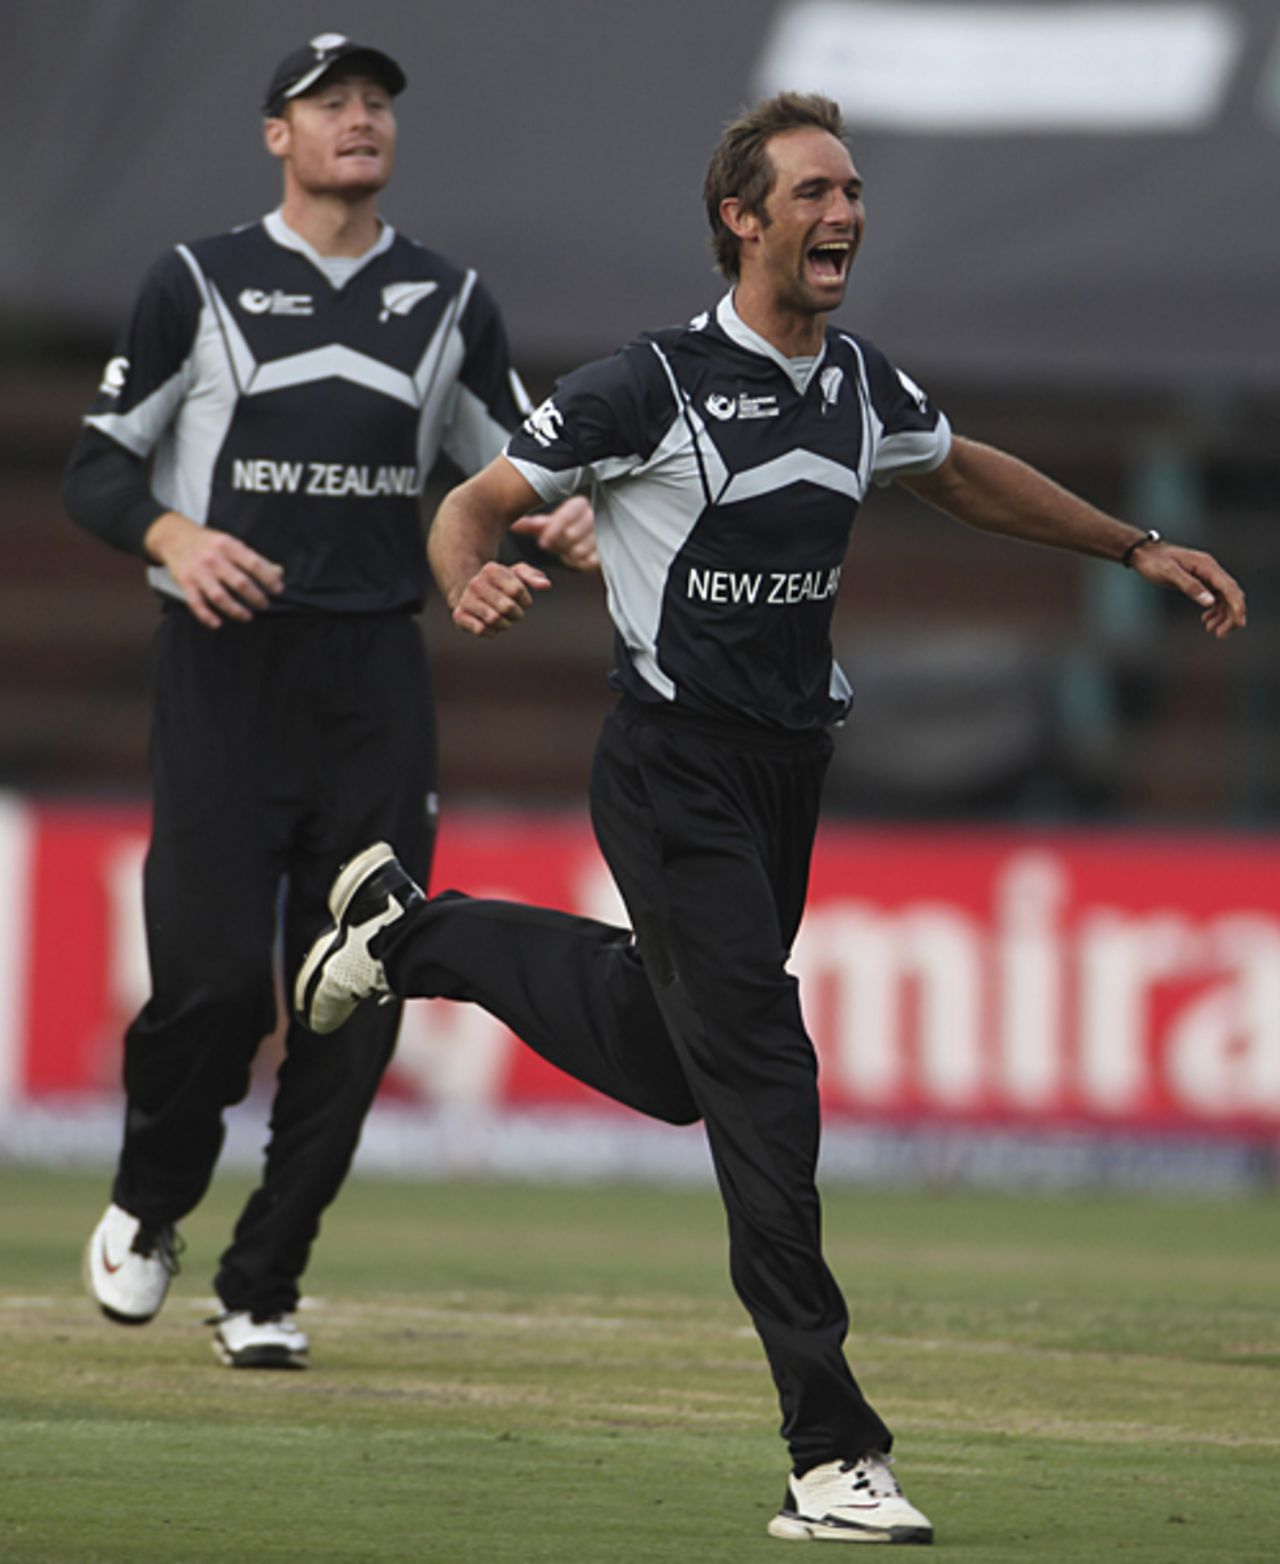 Grant Elliott picks up his fourth wicket, England v New Zealand, ICC Champions Trophy, Group B, Johannesburg, September 29, 2009